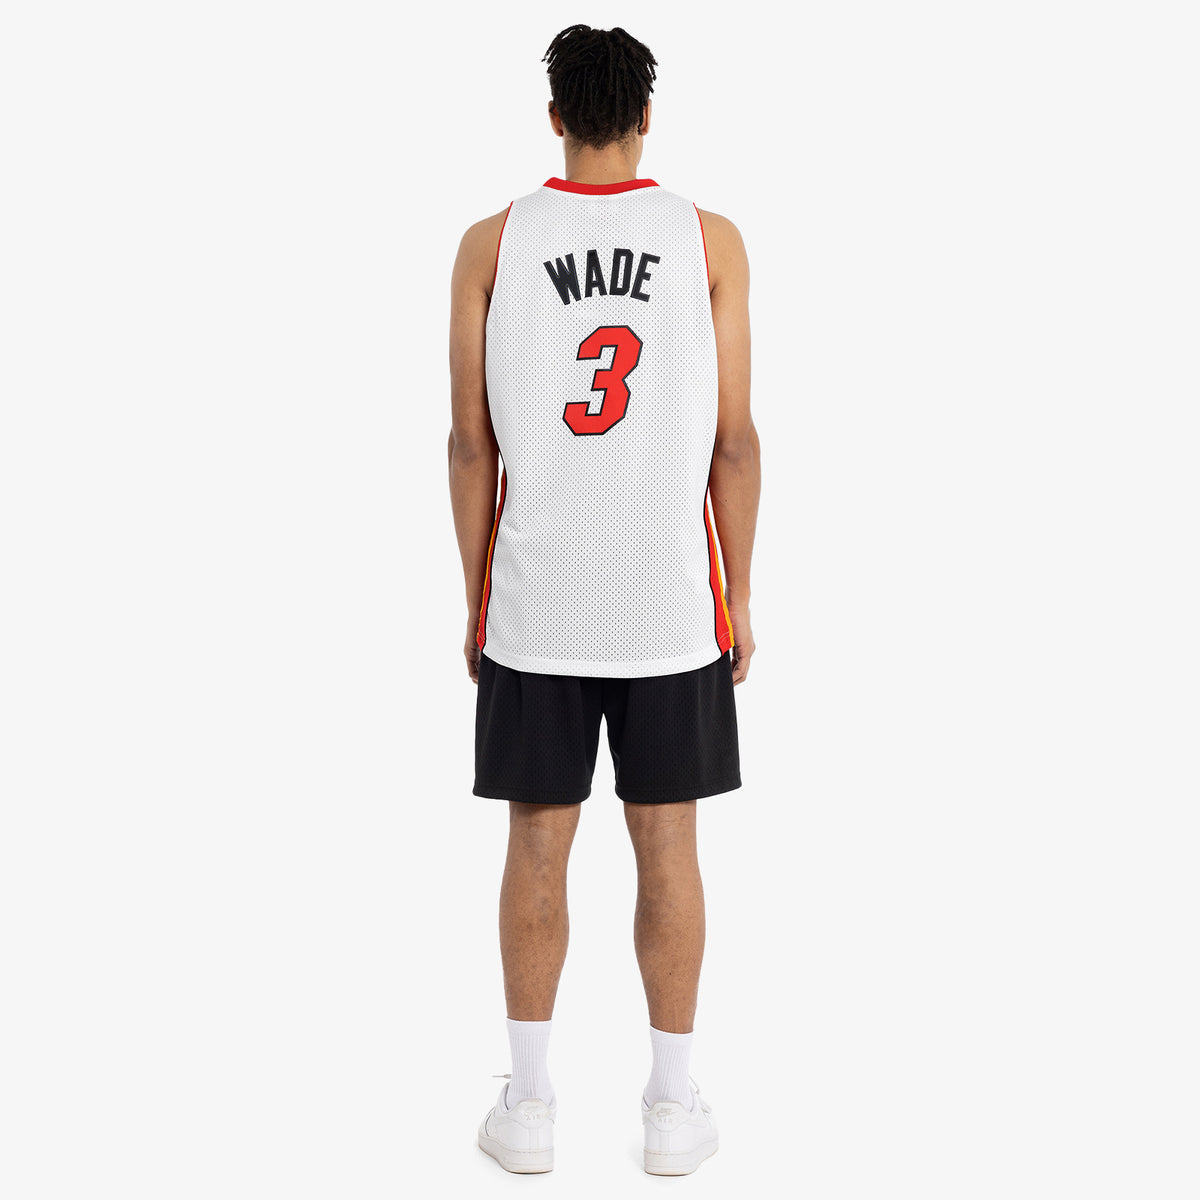 Adidas Dwayne Wade Miami Heat Swingman Jersey Red Mens Size 